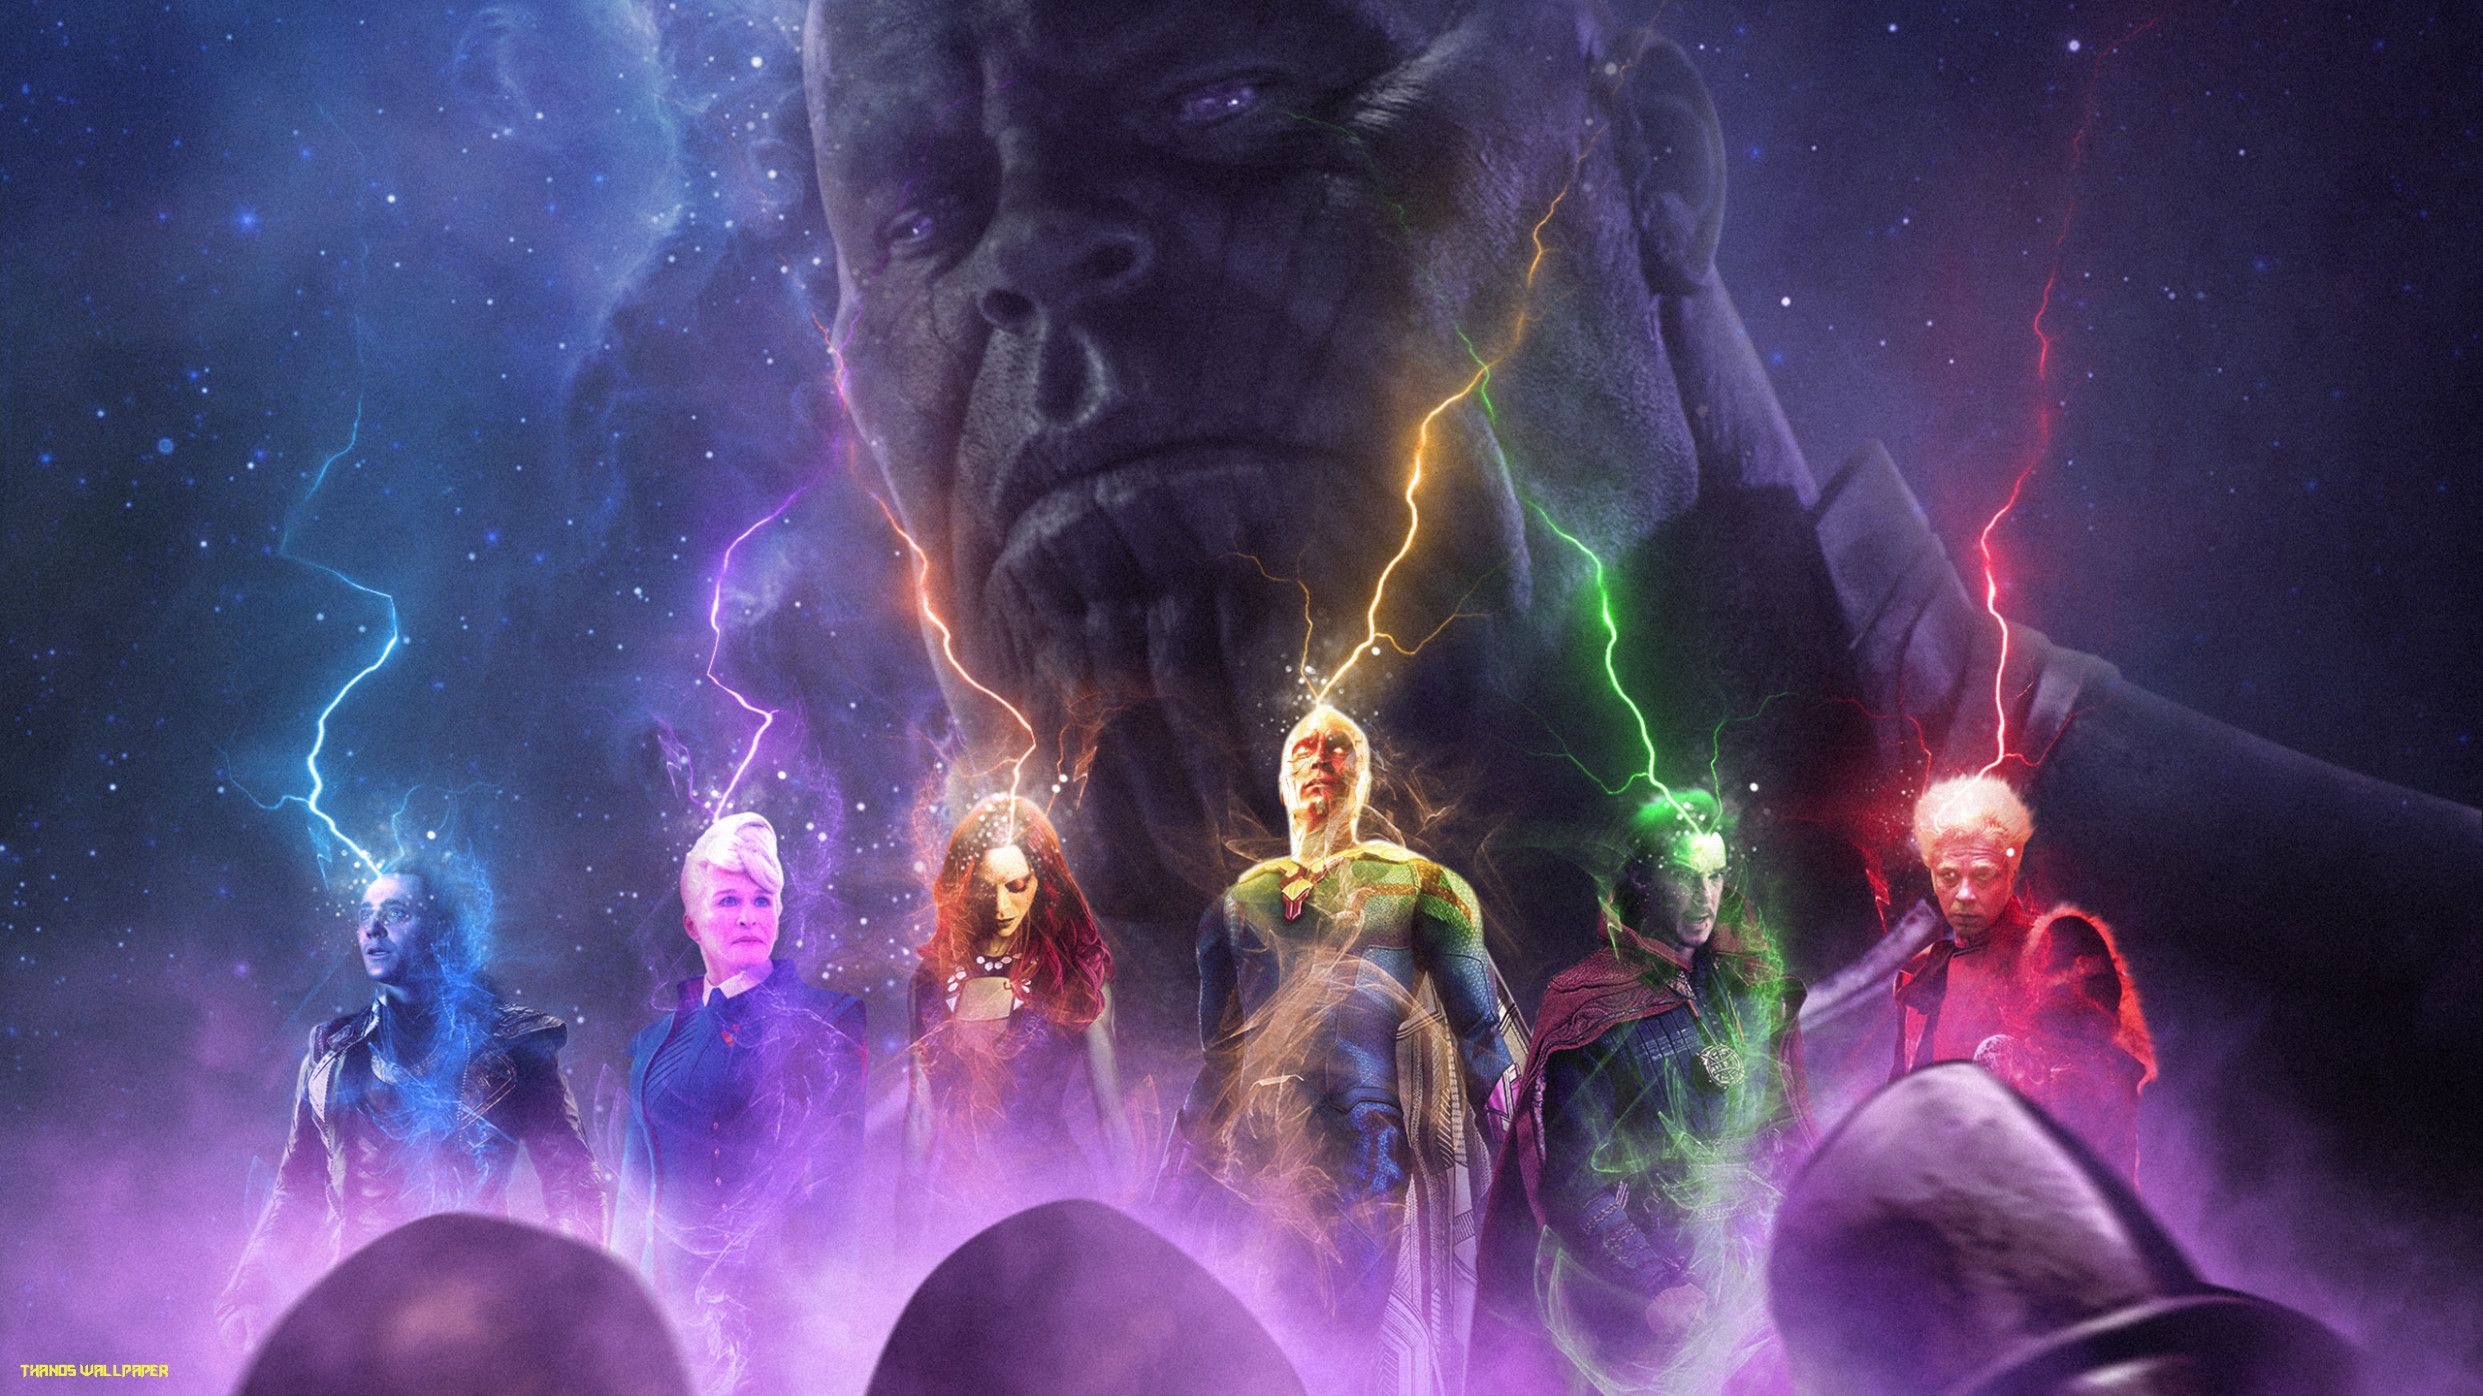 Thanos vs Avengers Wallpaper. HD Wallpaper. ID